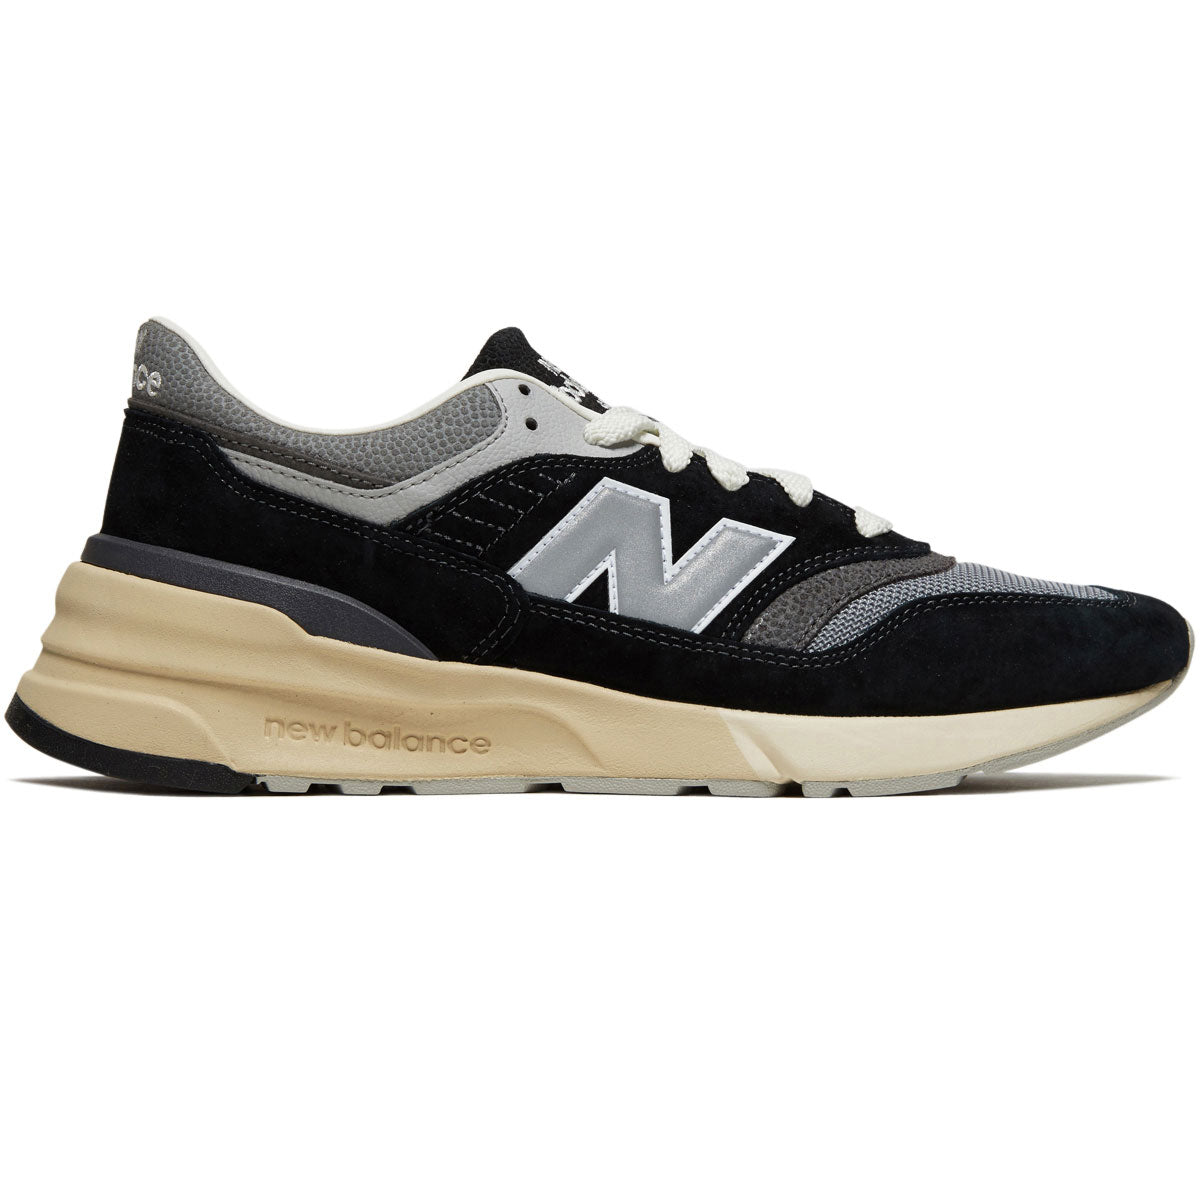 New Balance 997R Shoes - Black/Shadow Grey image 1